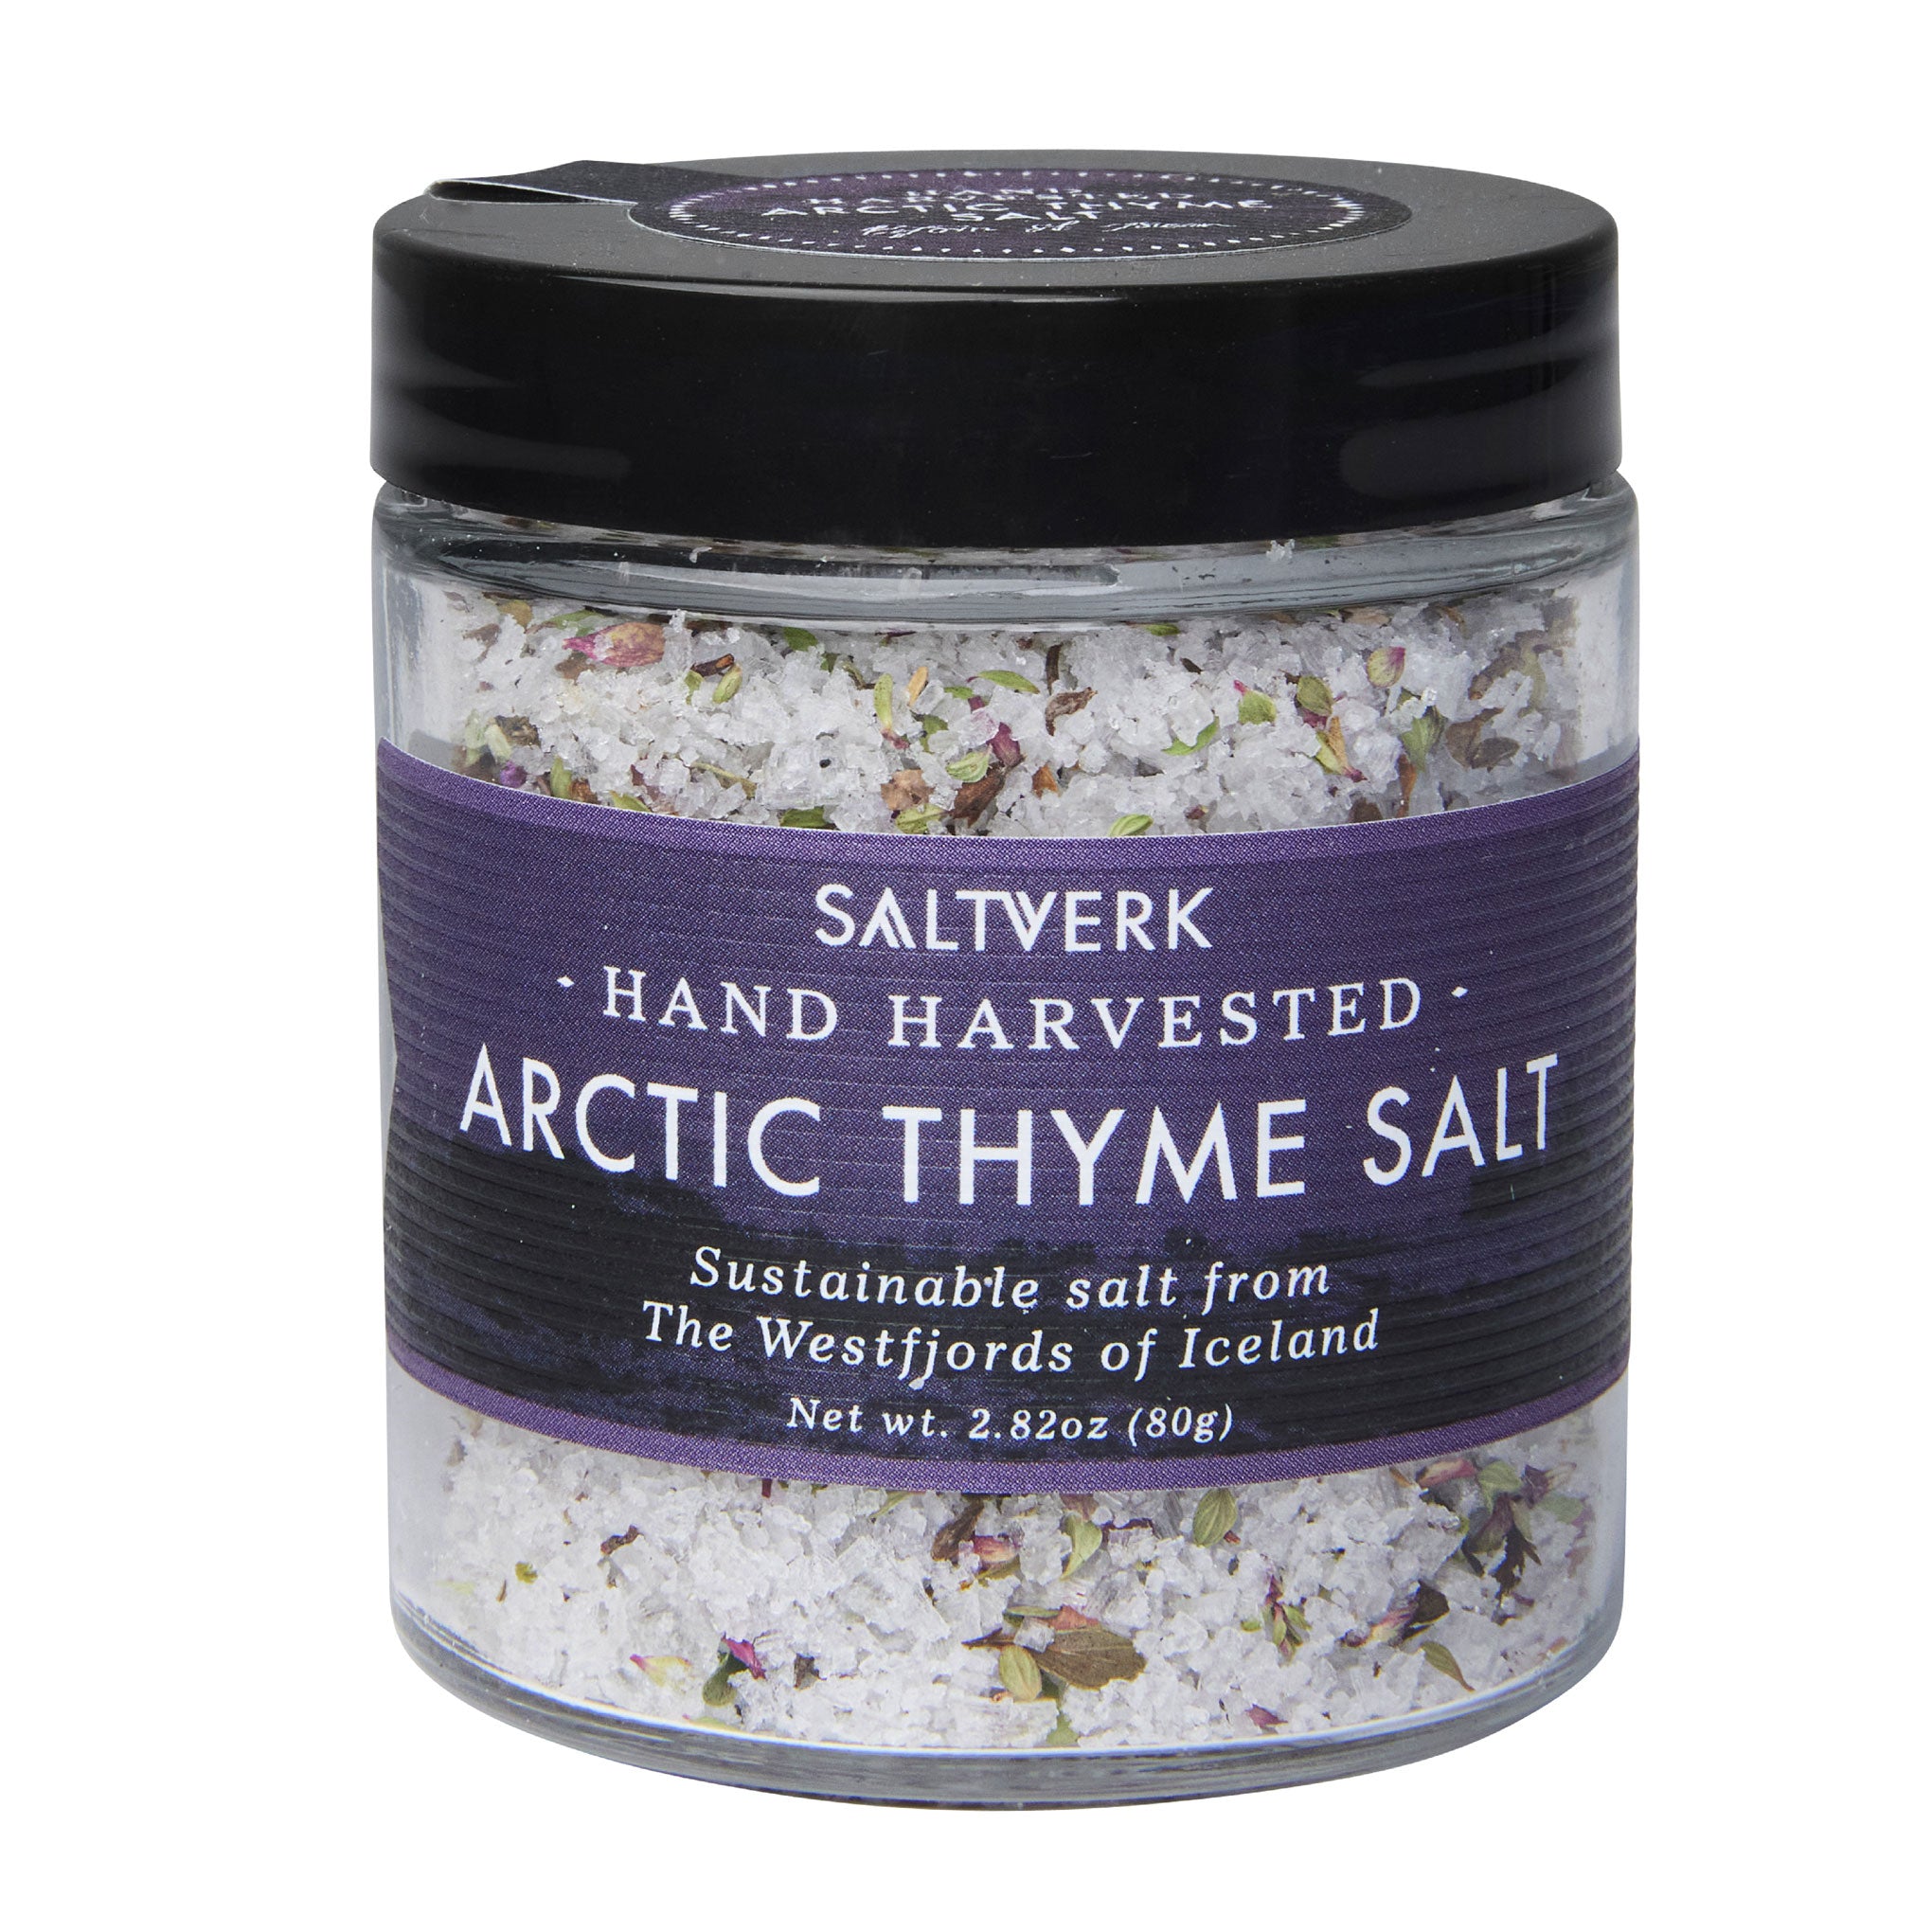 Sustainable Sea Salt from Iceland